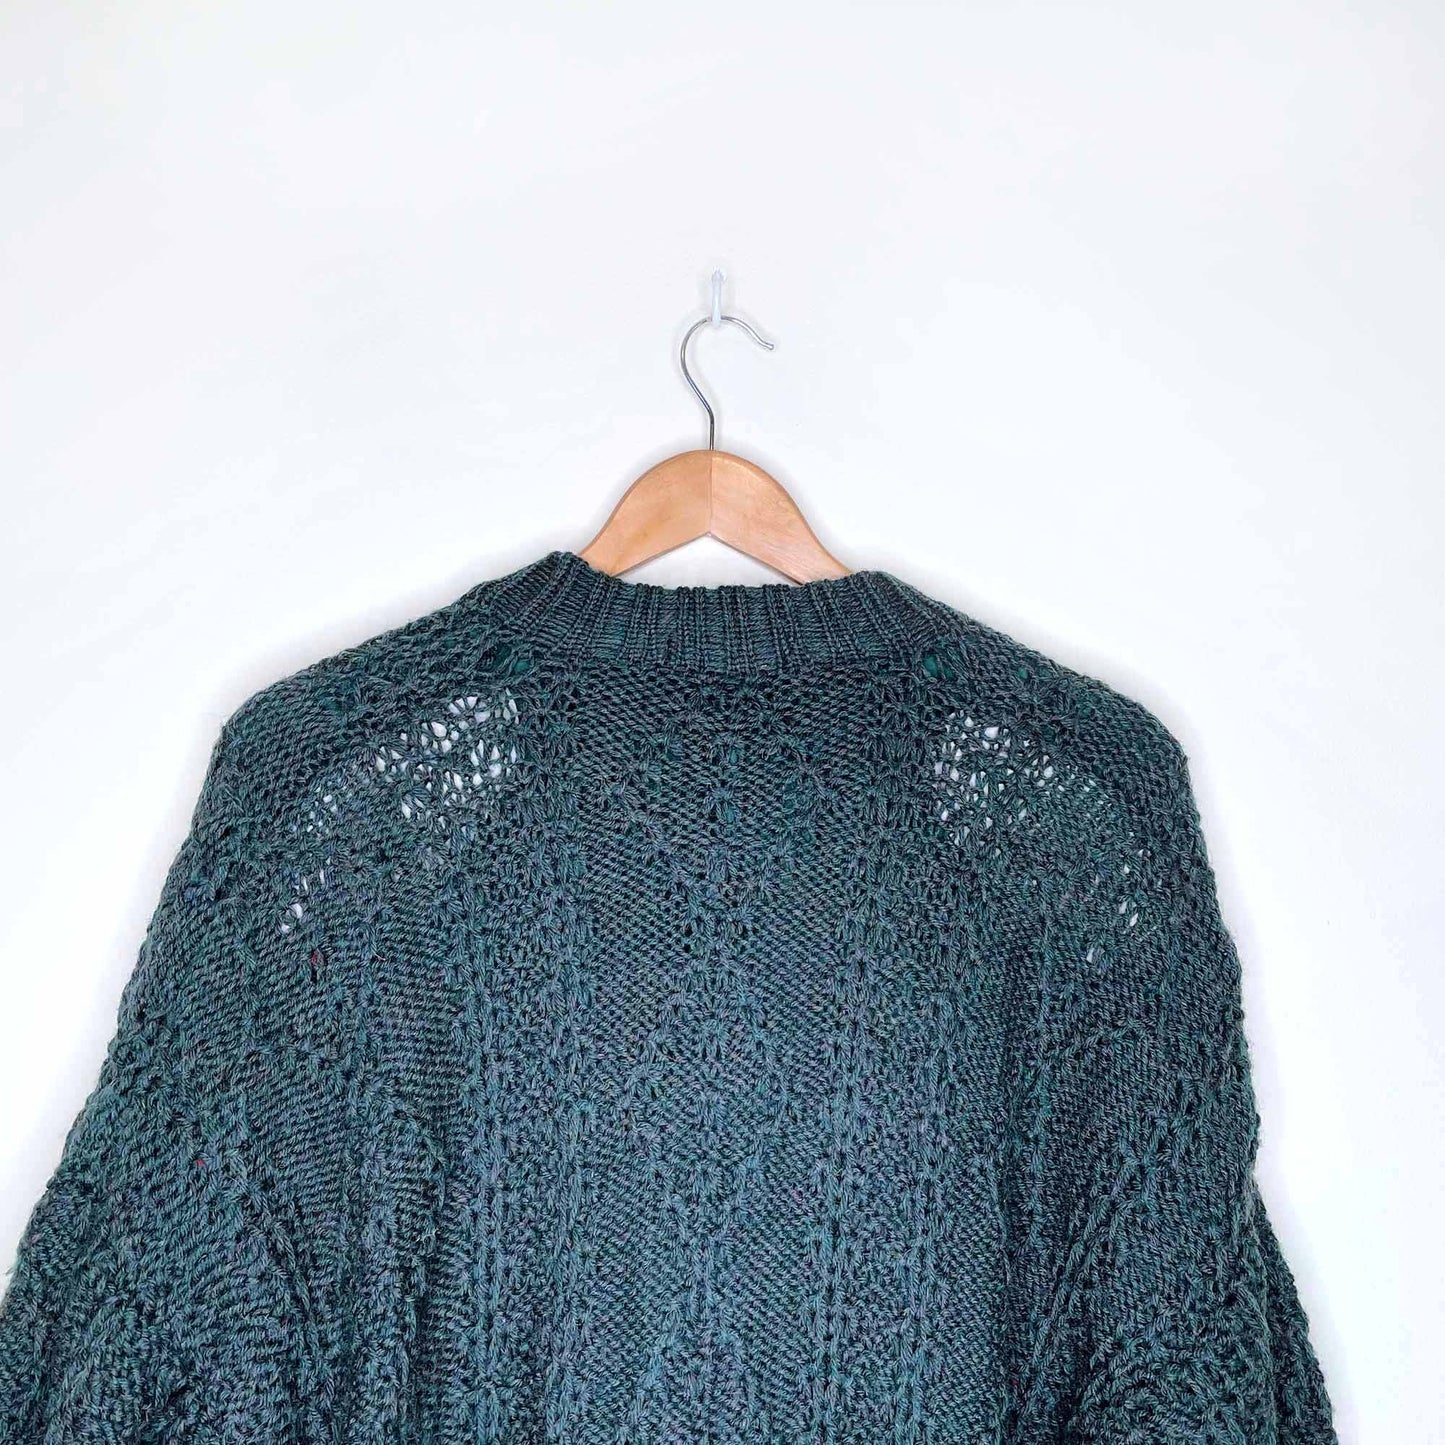 vintage erika knitwear ireland fisherman's handknit duster sweater jacket - size med/large